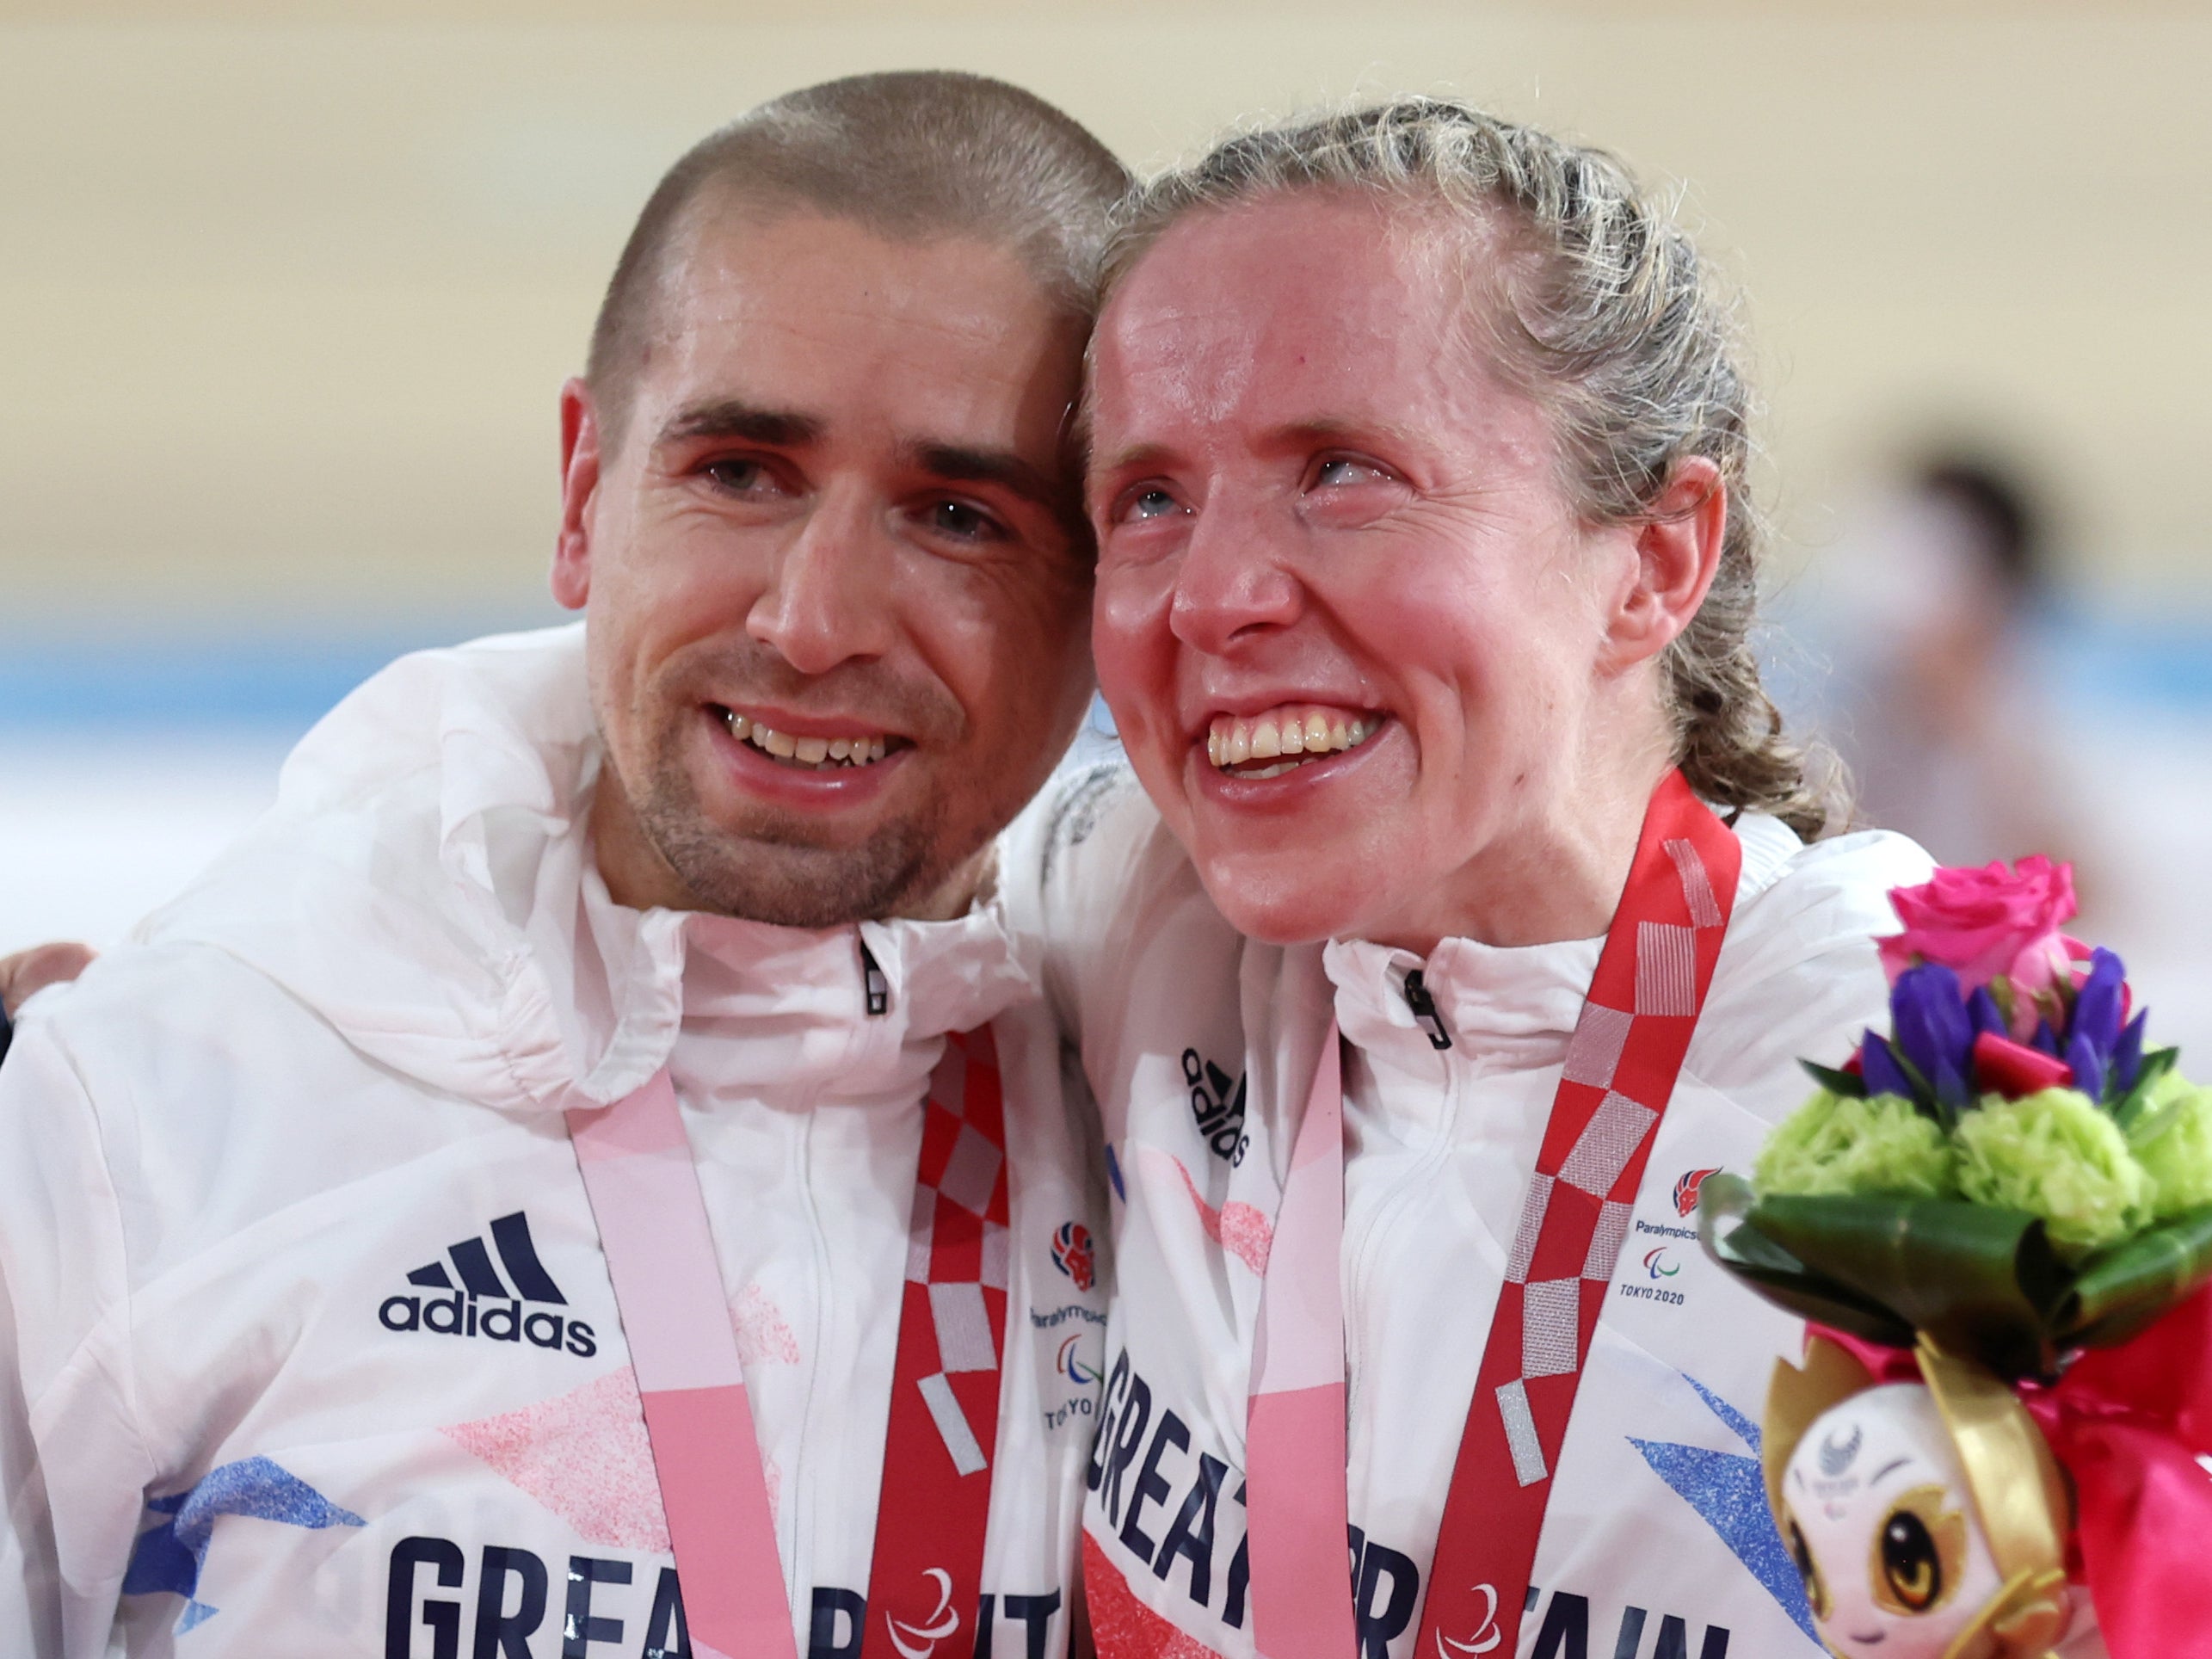 Gold medalists Neil and Lora Fachie celebrate at the Izu Velodrome